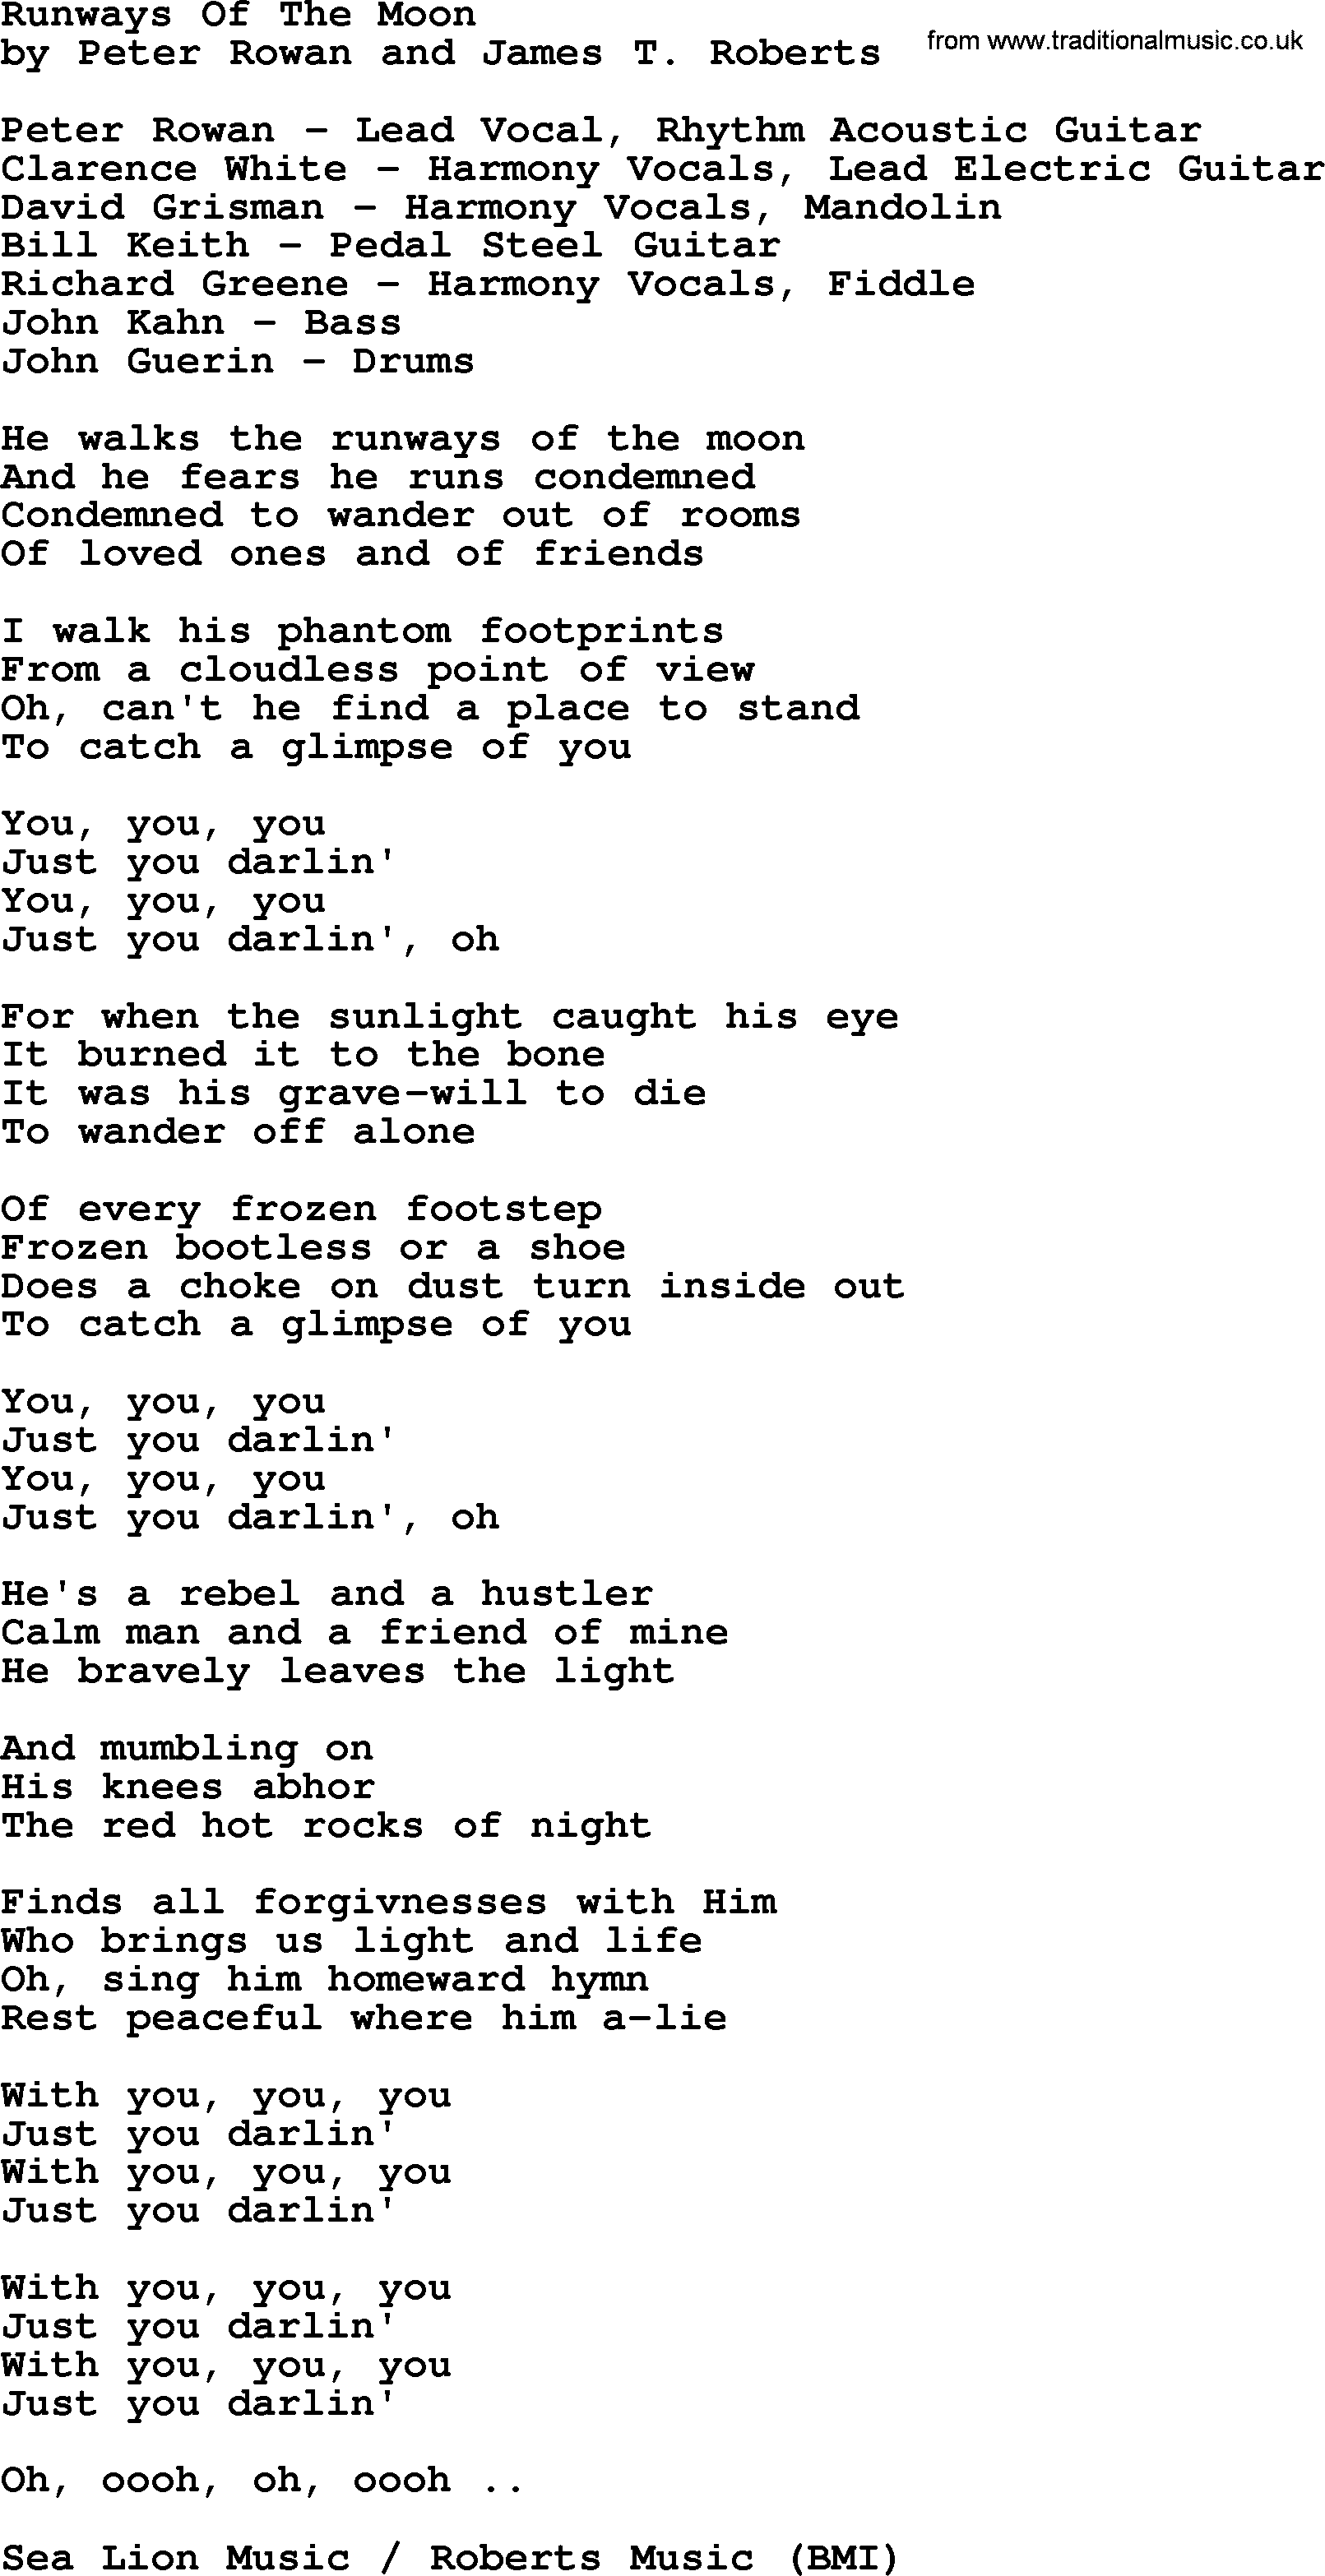 The Byrds song Runways Of The Moon, lyrics